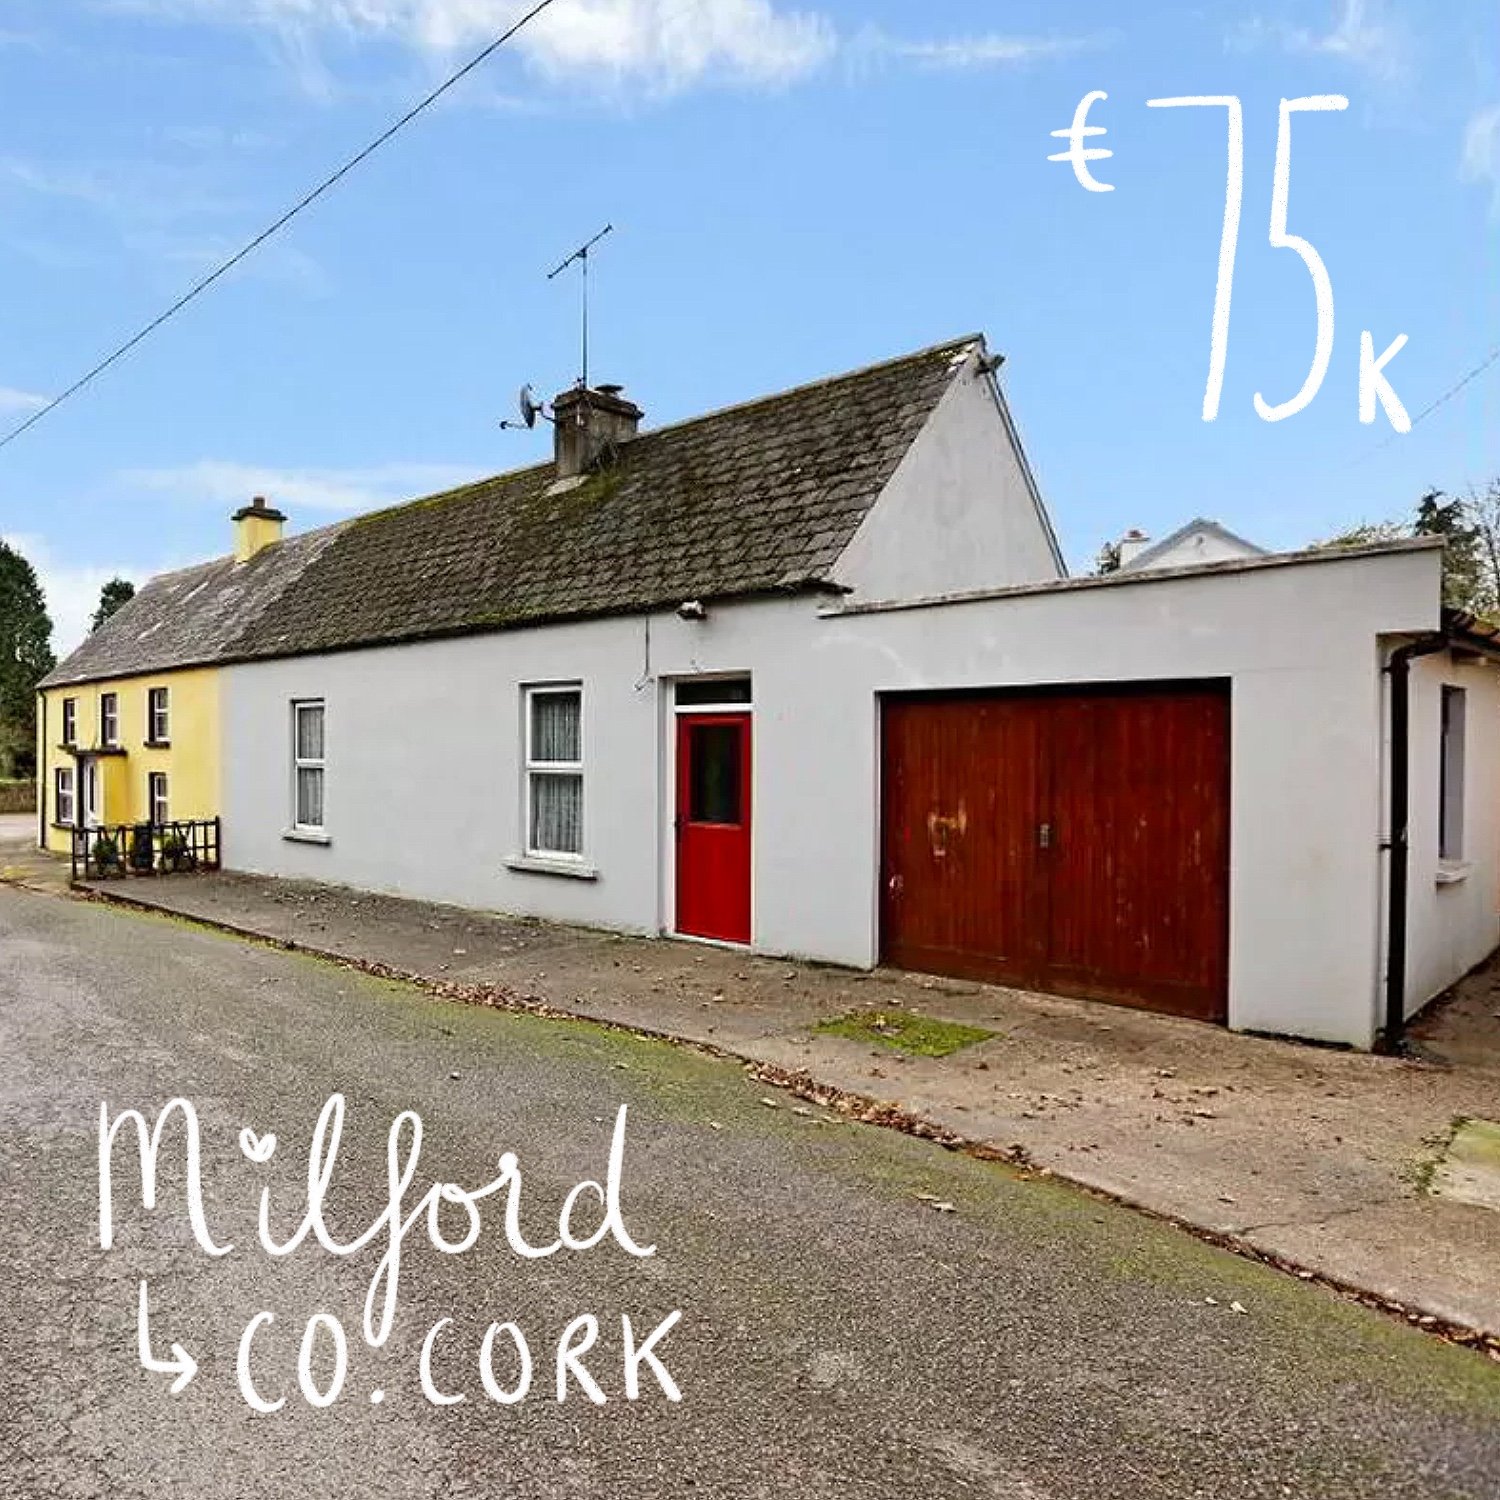 Scart, Milford, Co. Cork. €75k